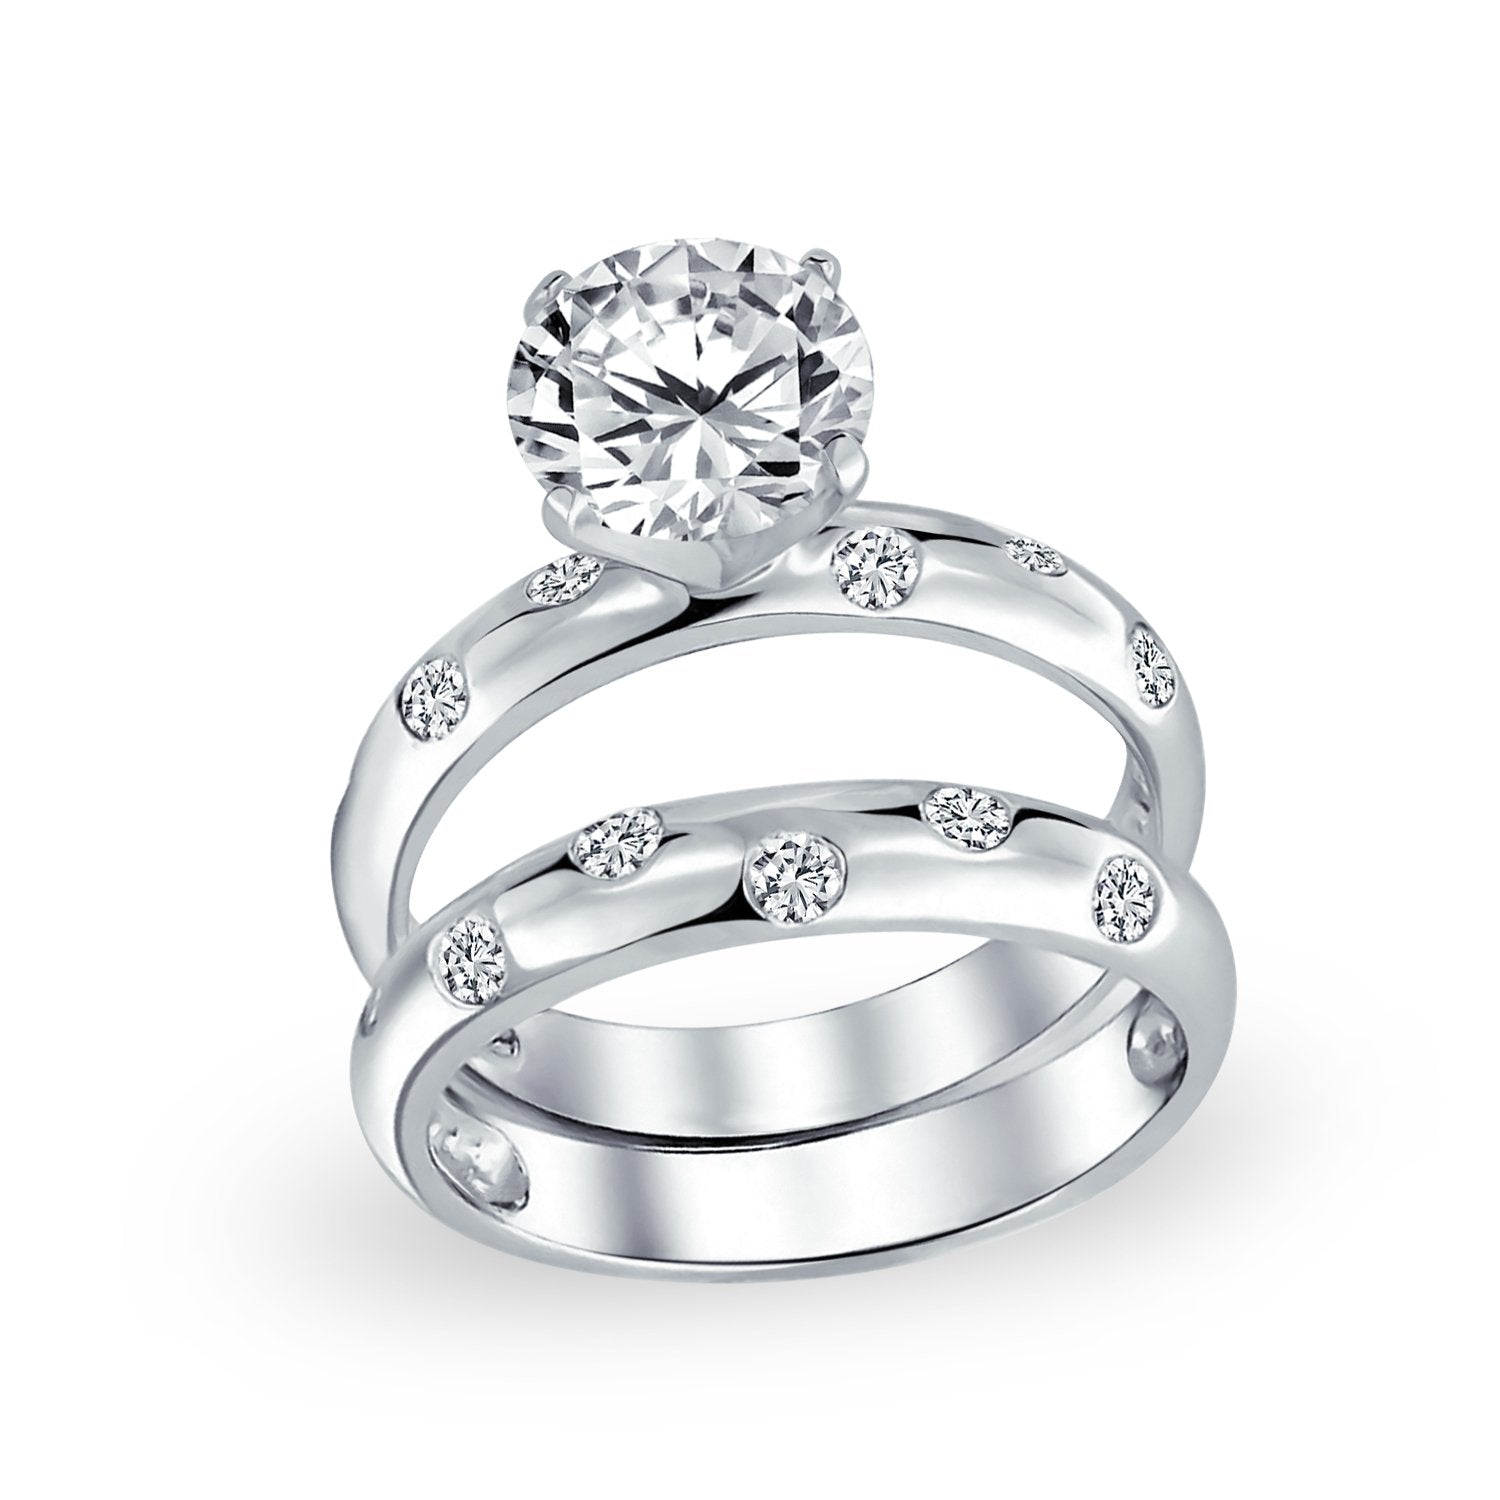 3CT Etoile AAA CZ Engagement Ring Wedding Band Set 925 Sterling Silver - Joyeria Lady